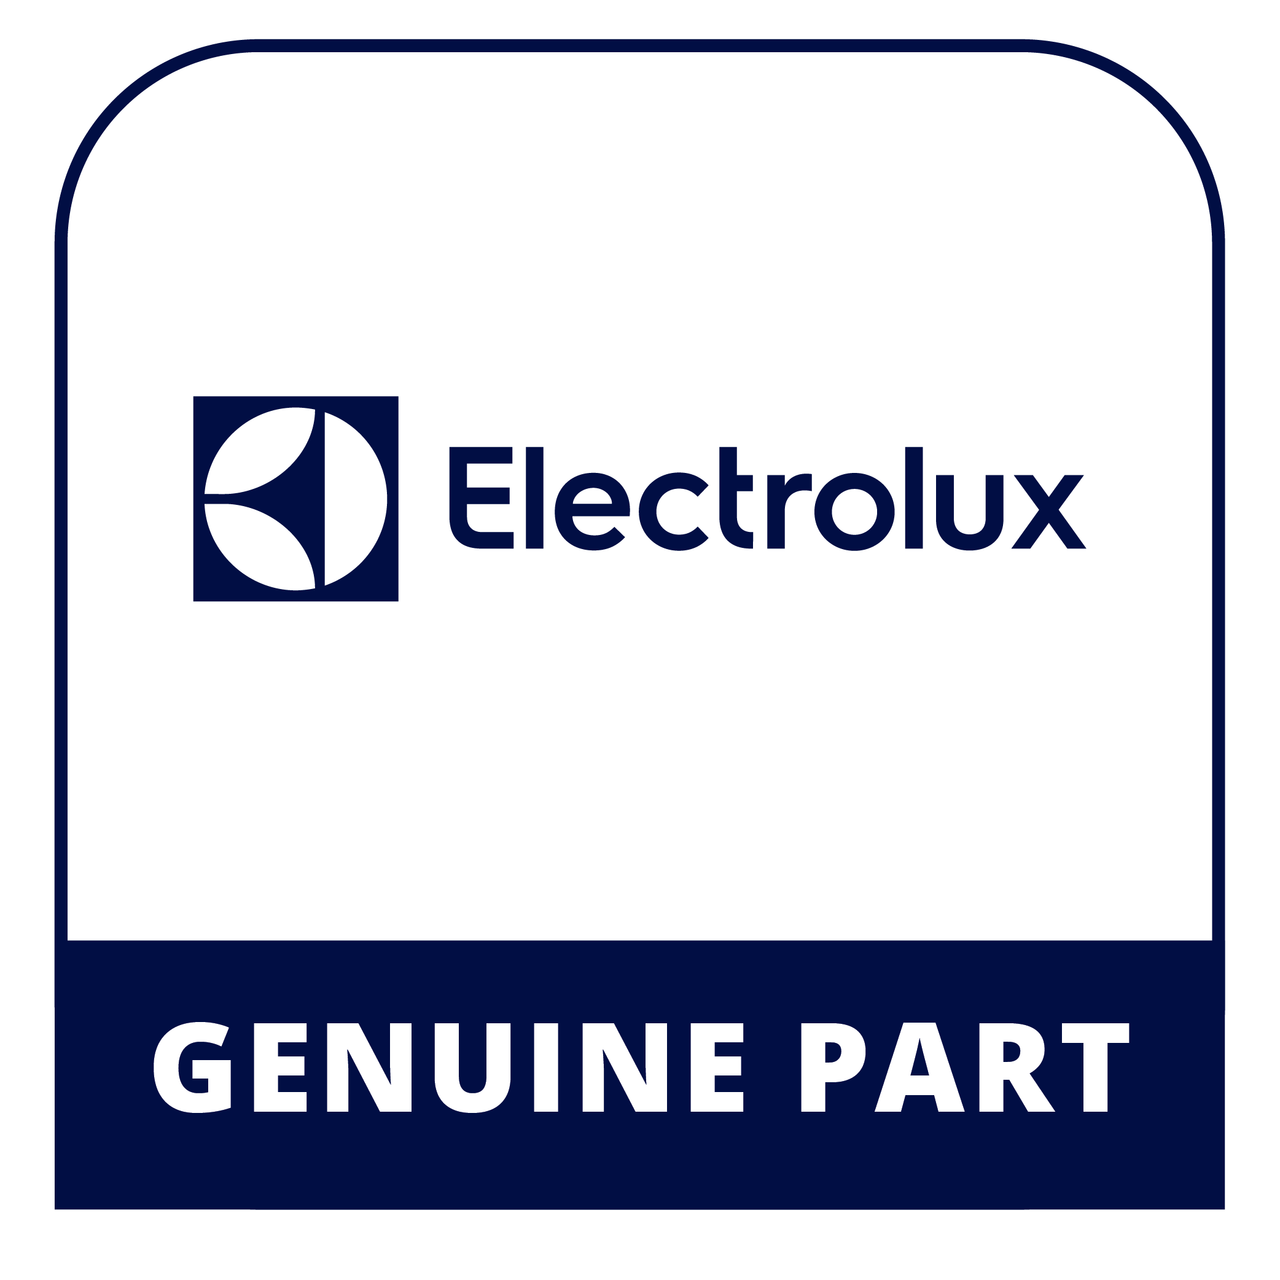 Frigidaire - Electrolux 3051505 - Knob - Genuine Electrolux Part